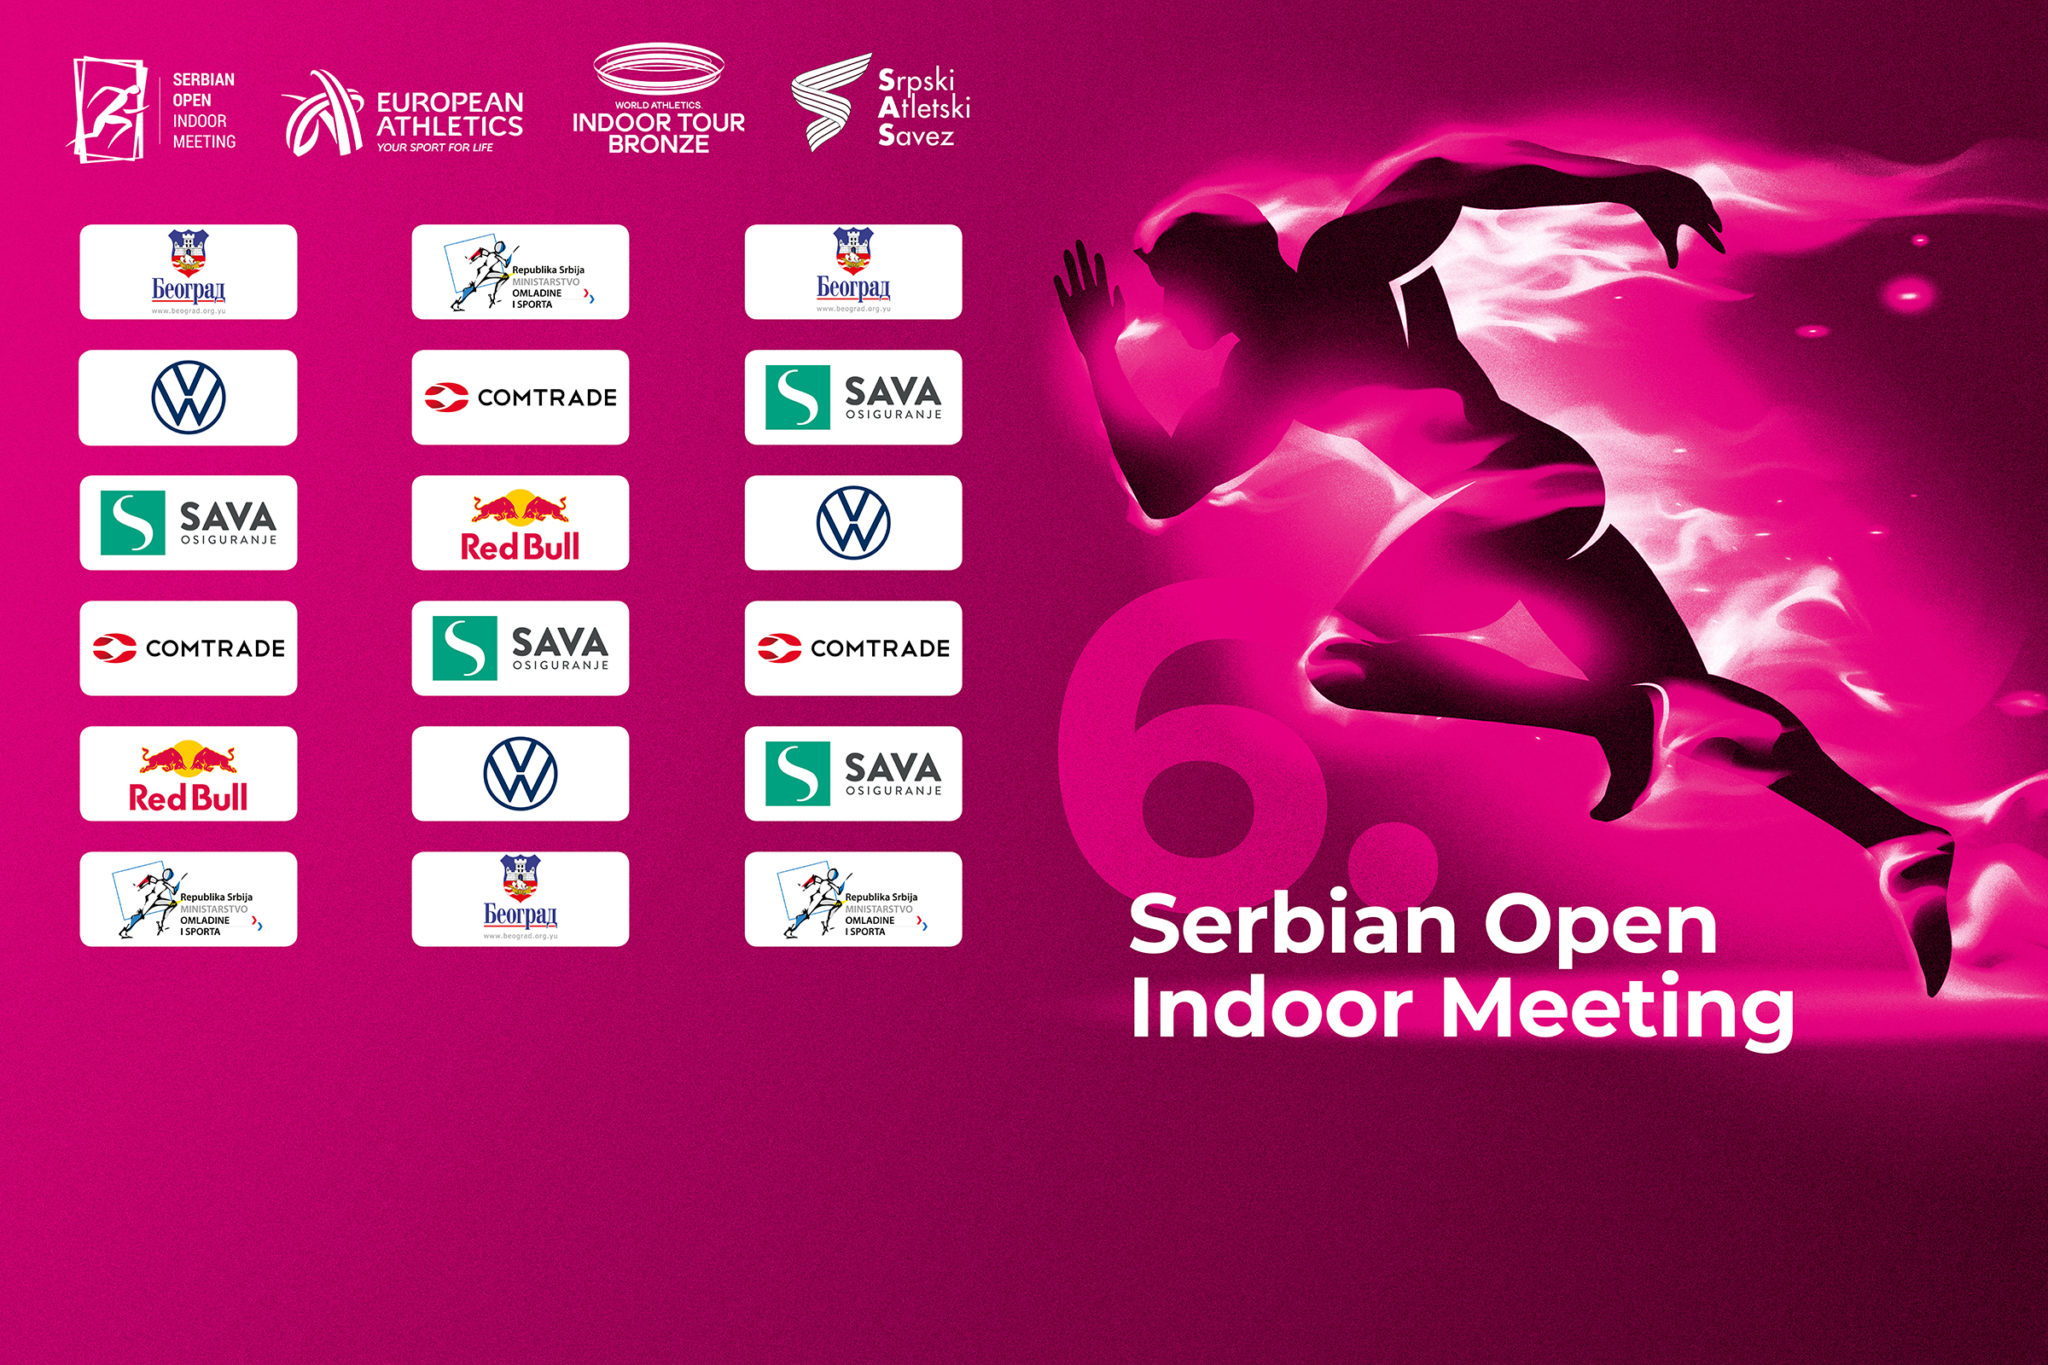 ATLETSKI SPEKTAKL: Serbian Open Indoor Meeting 